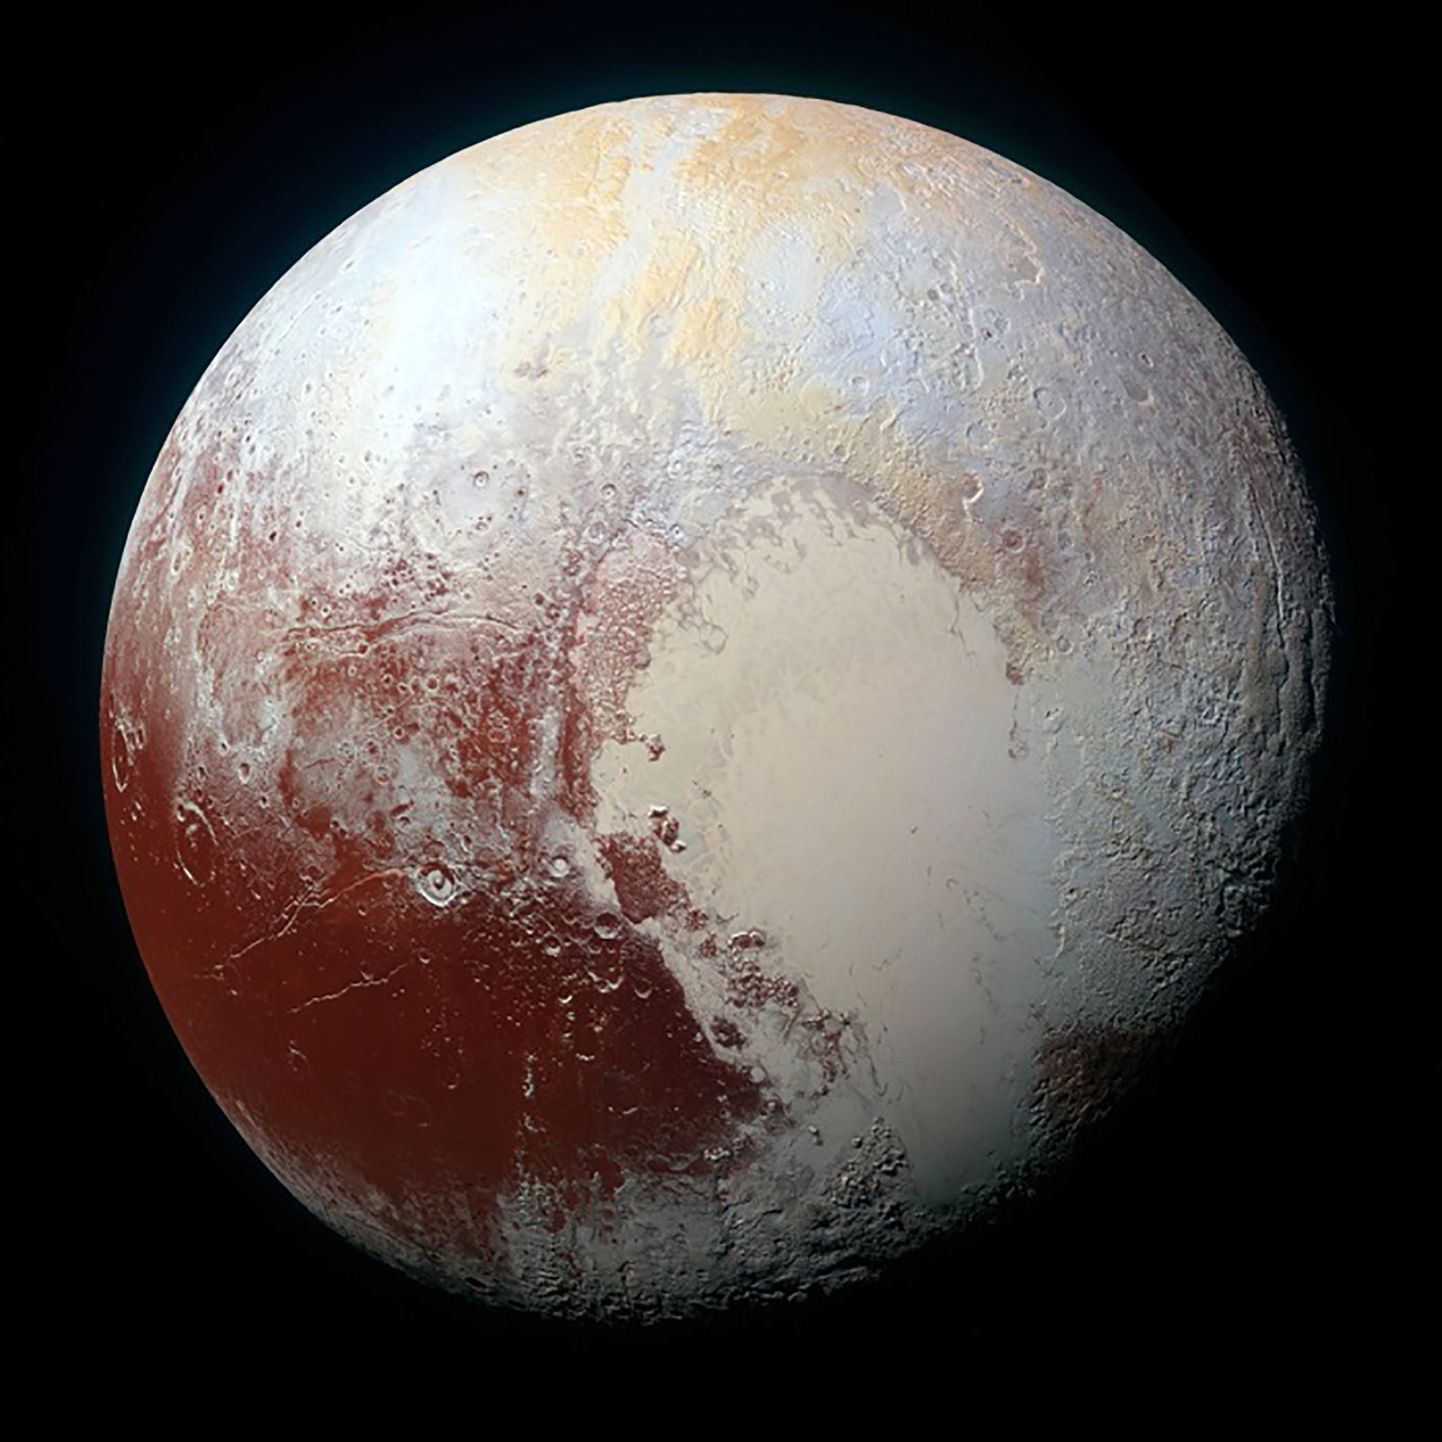 Uus pilt Pluutost, mille tegi NASA New Horizonsi kosmosesond.